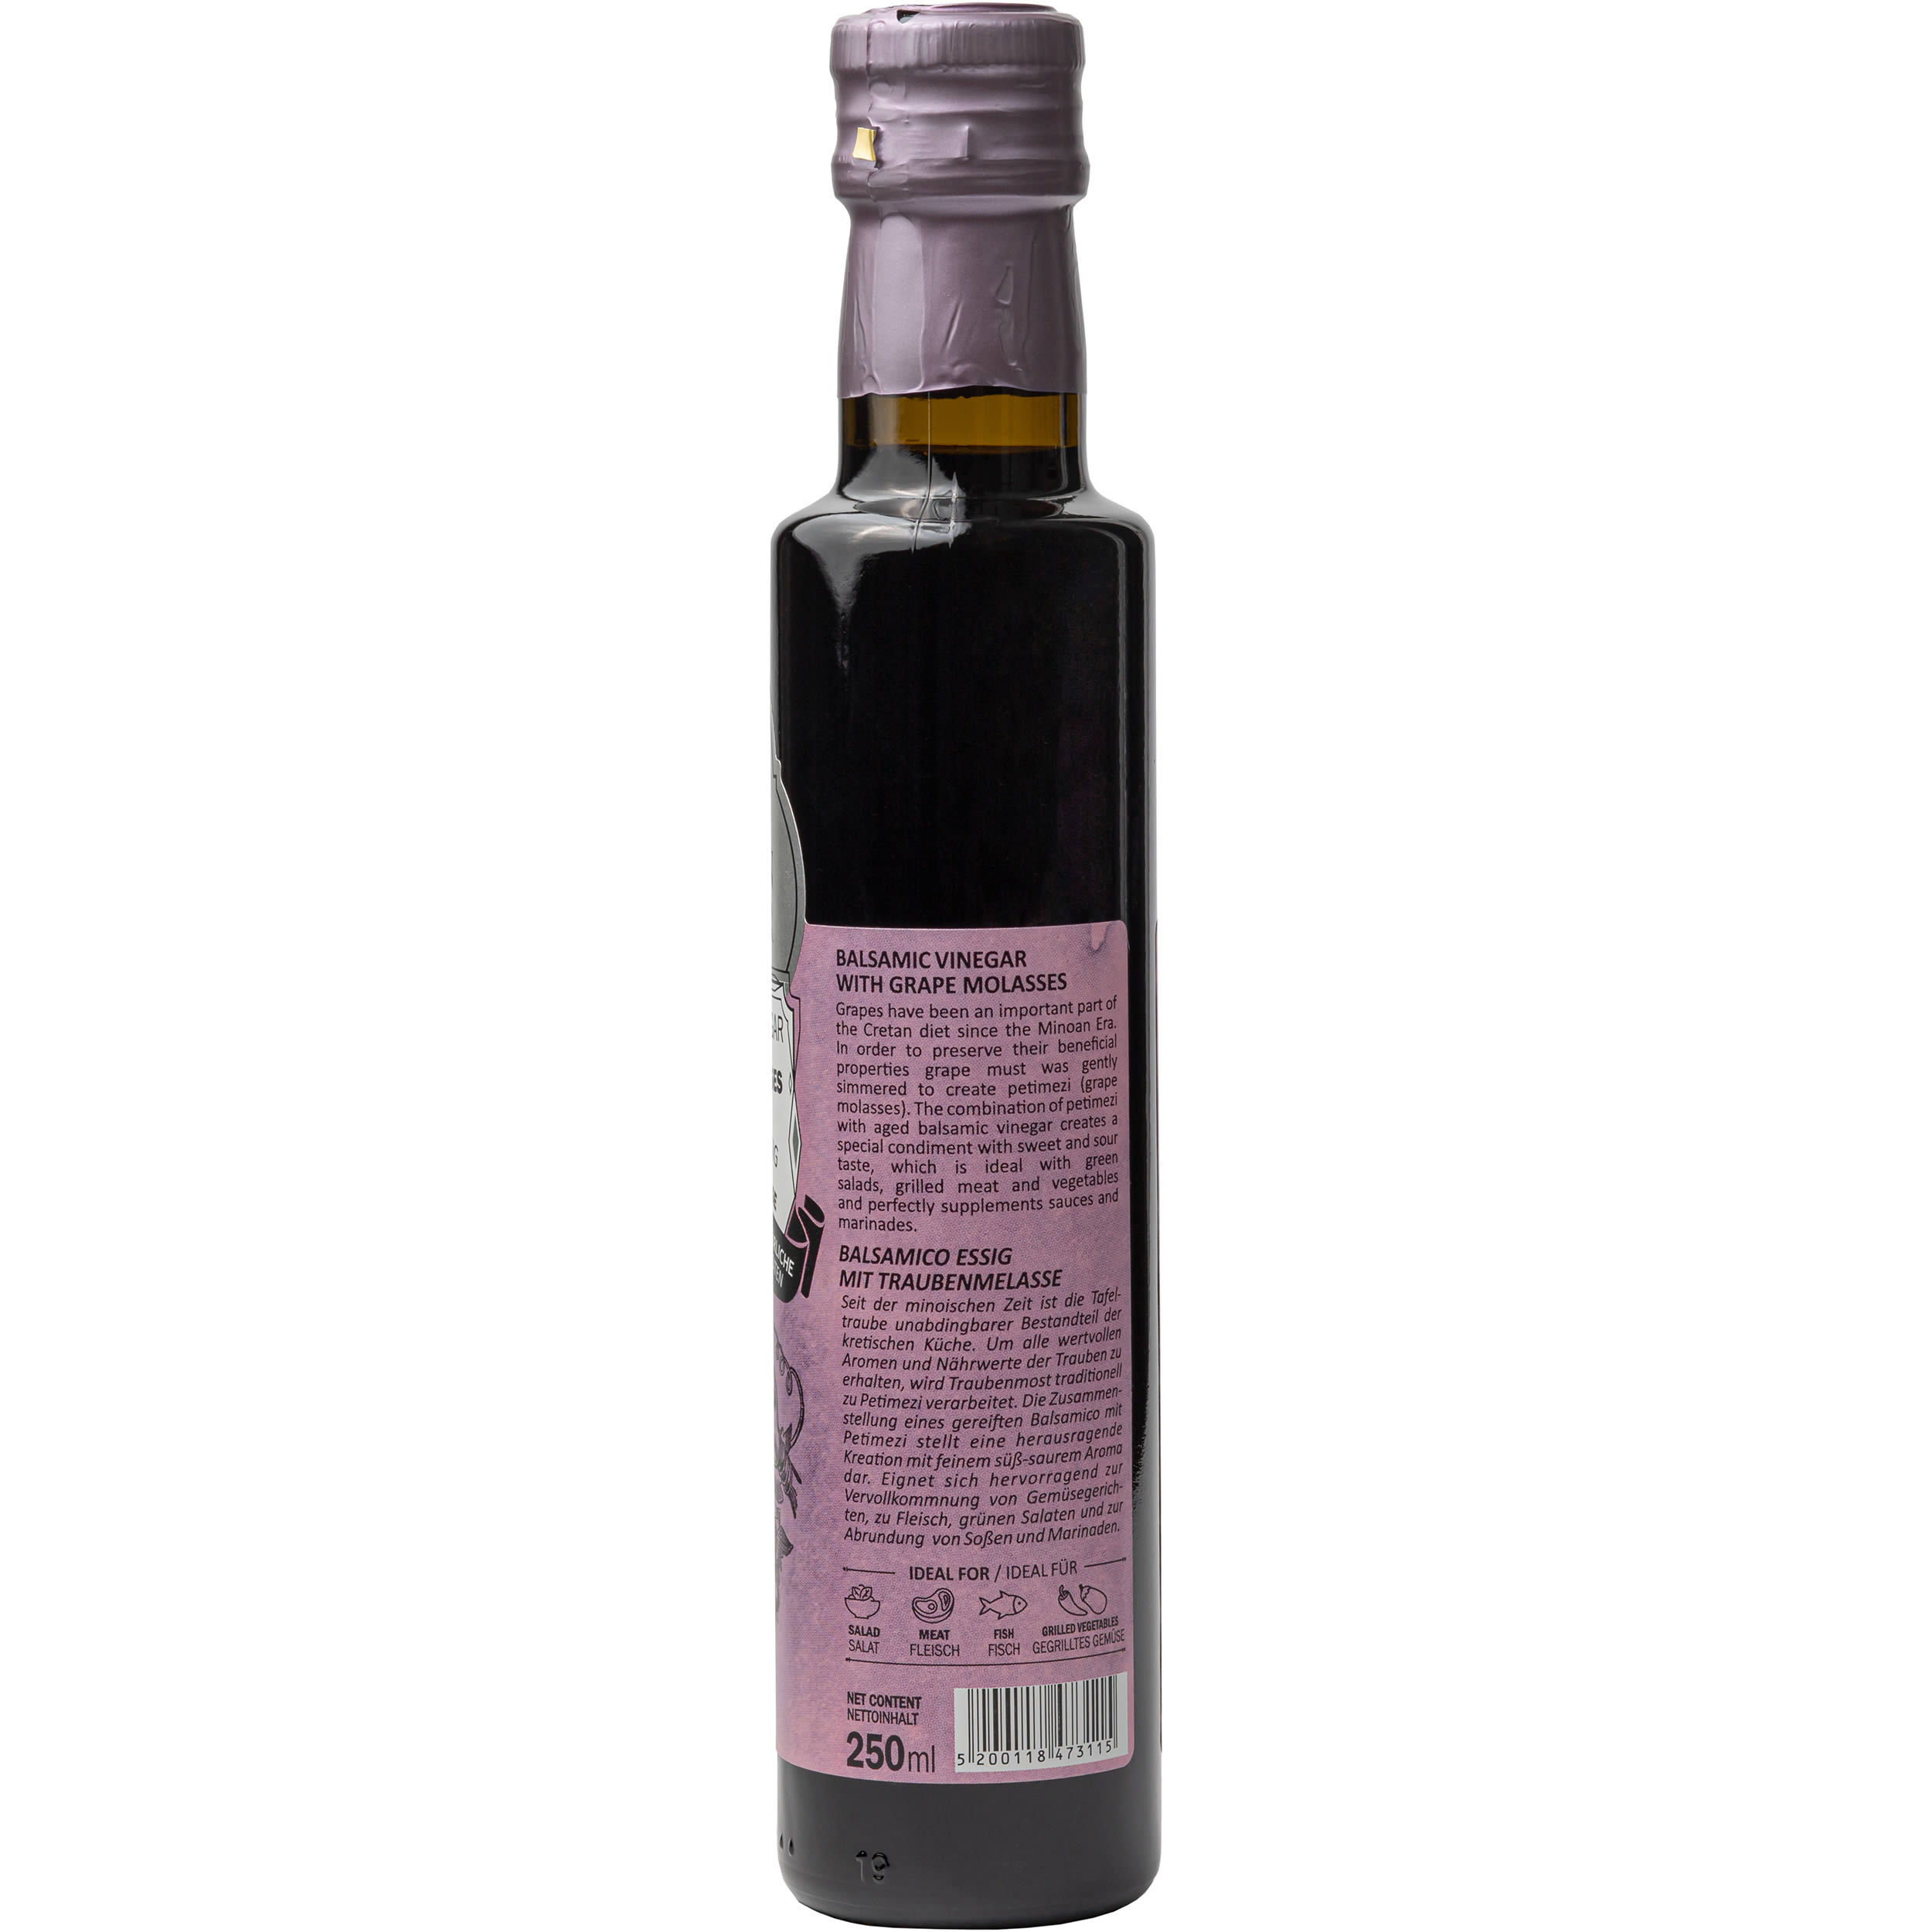 Cretan Nectar - Balsamico Essig mit Petimezi 250 ml